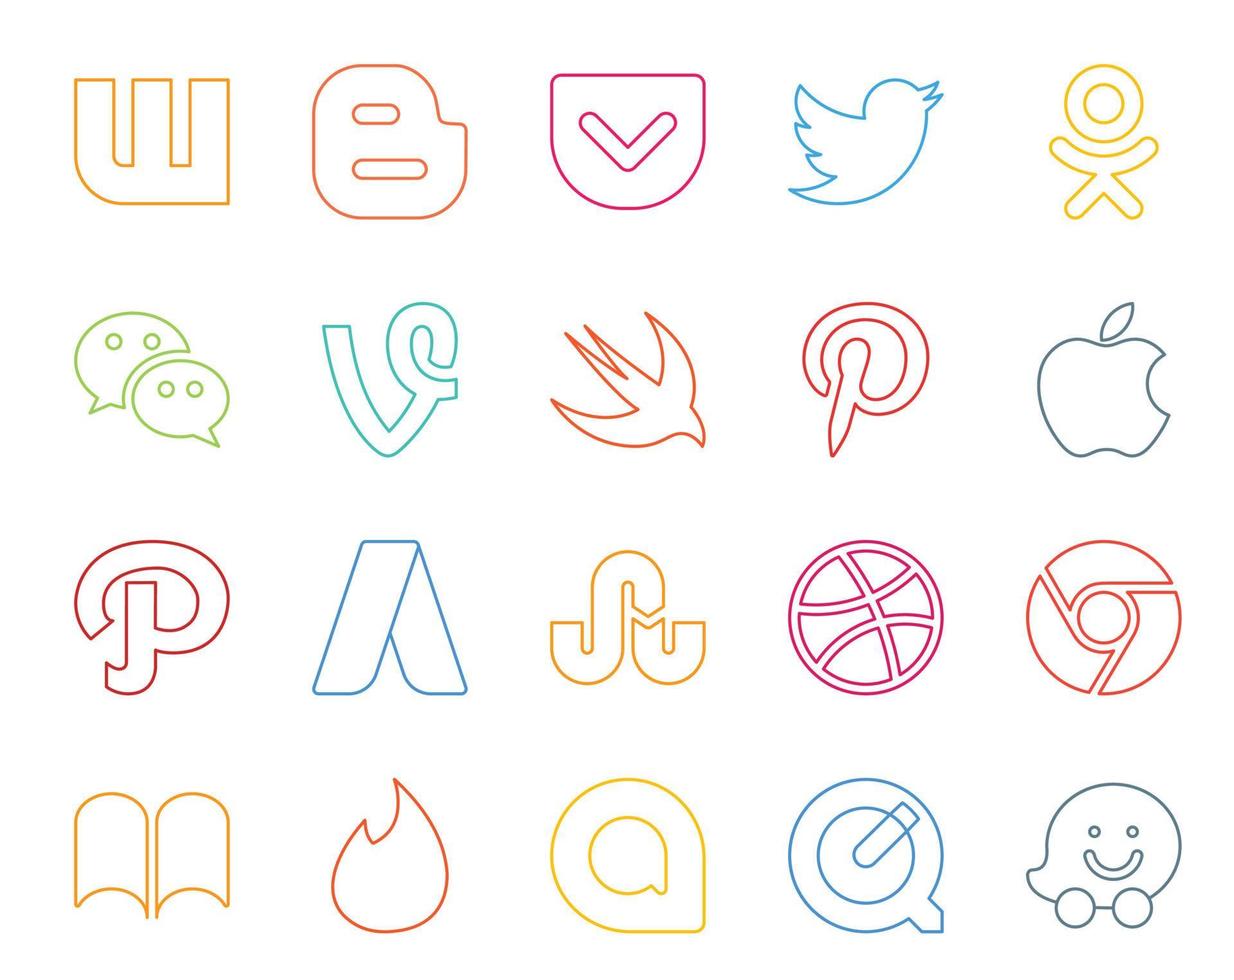 20 Social Media Icon Pack Including ibooks dribbble vine stumbleupon path vector